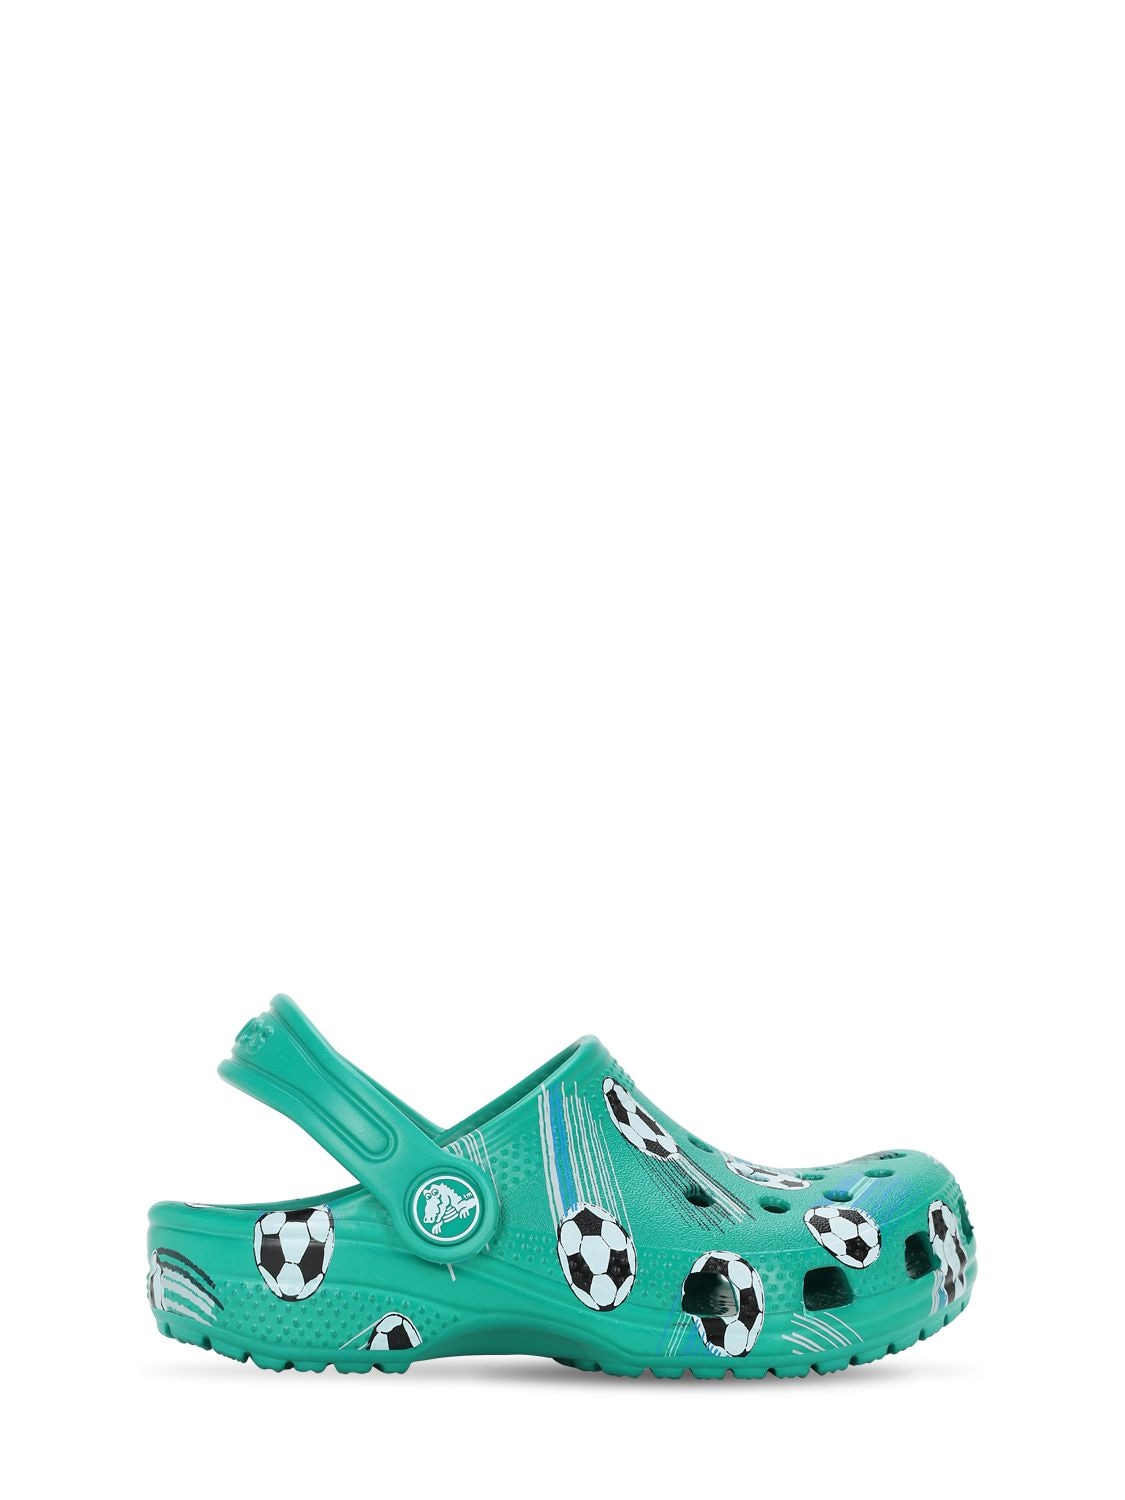 football crocs